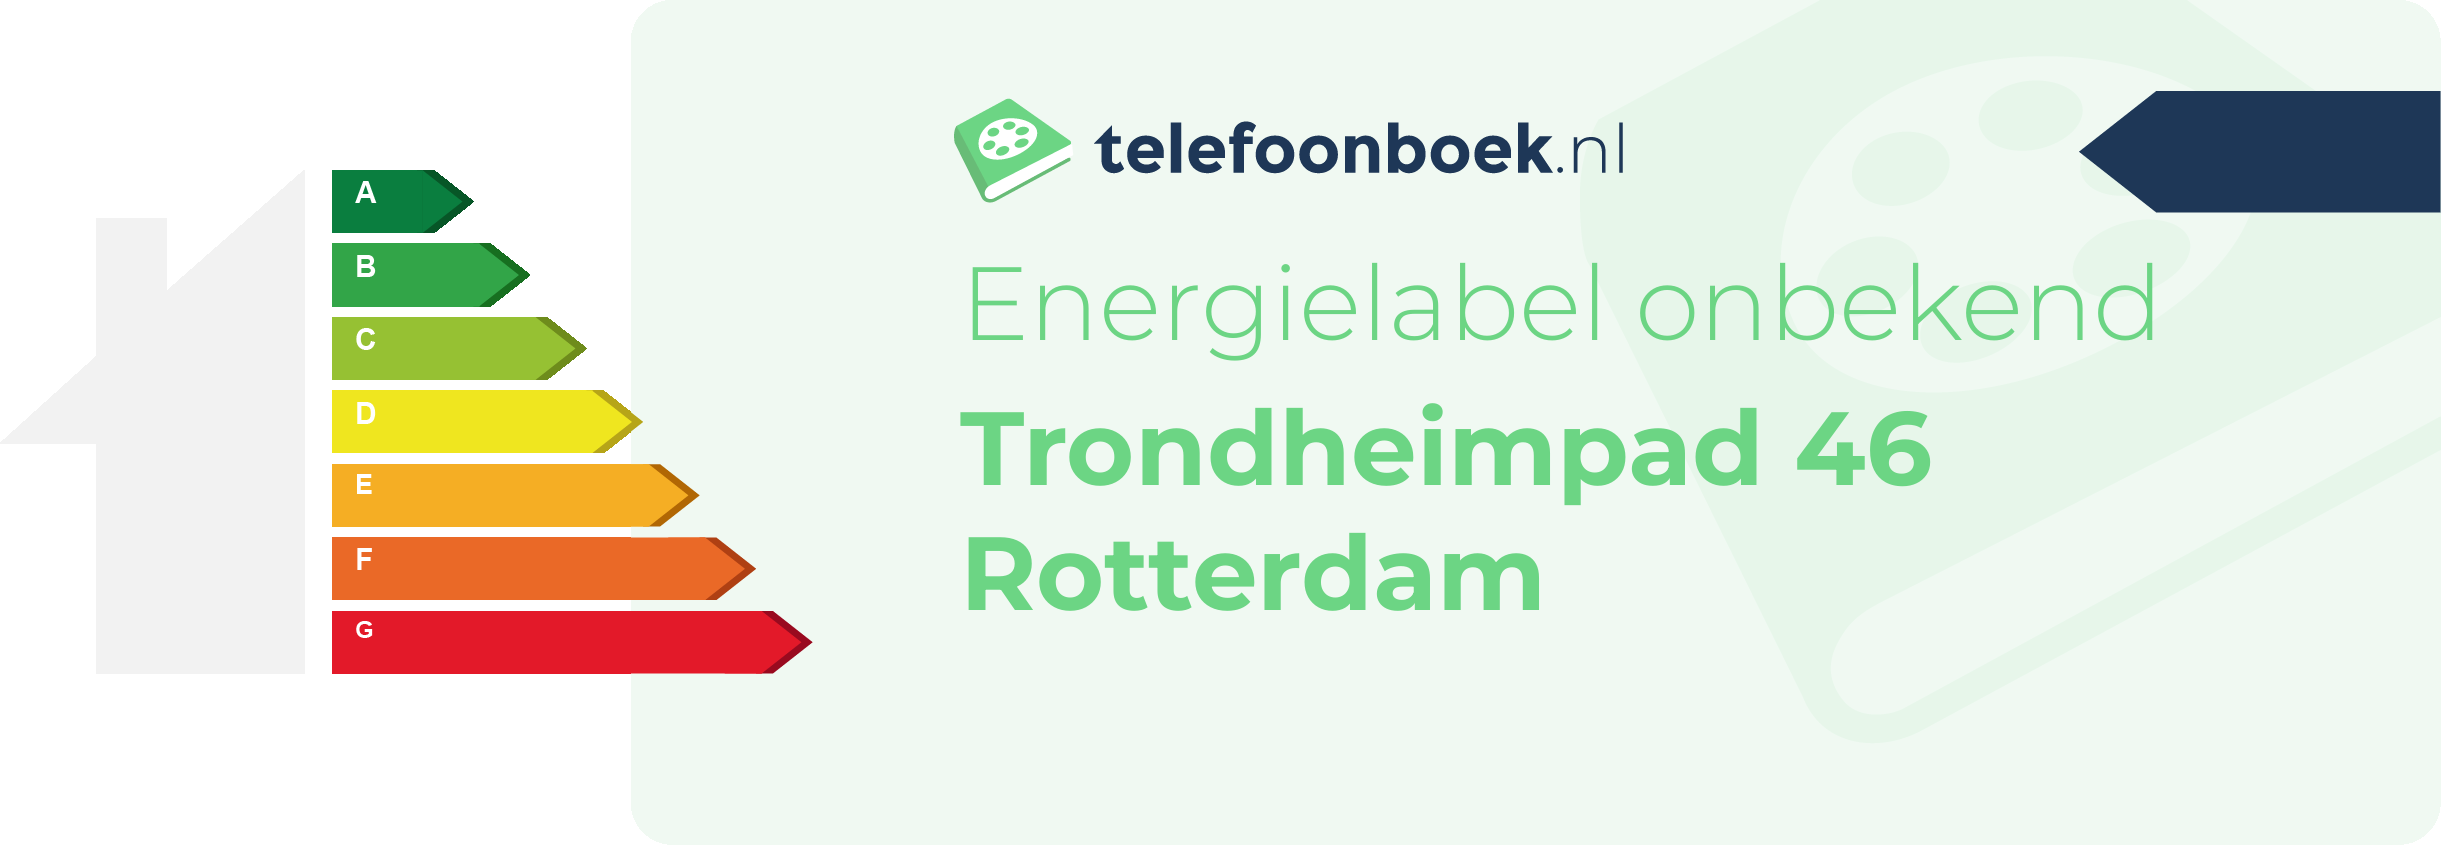 Energielabel Trondheimpad 46 Rotterdam